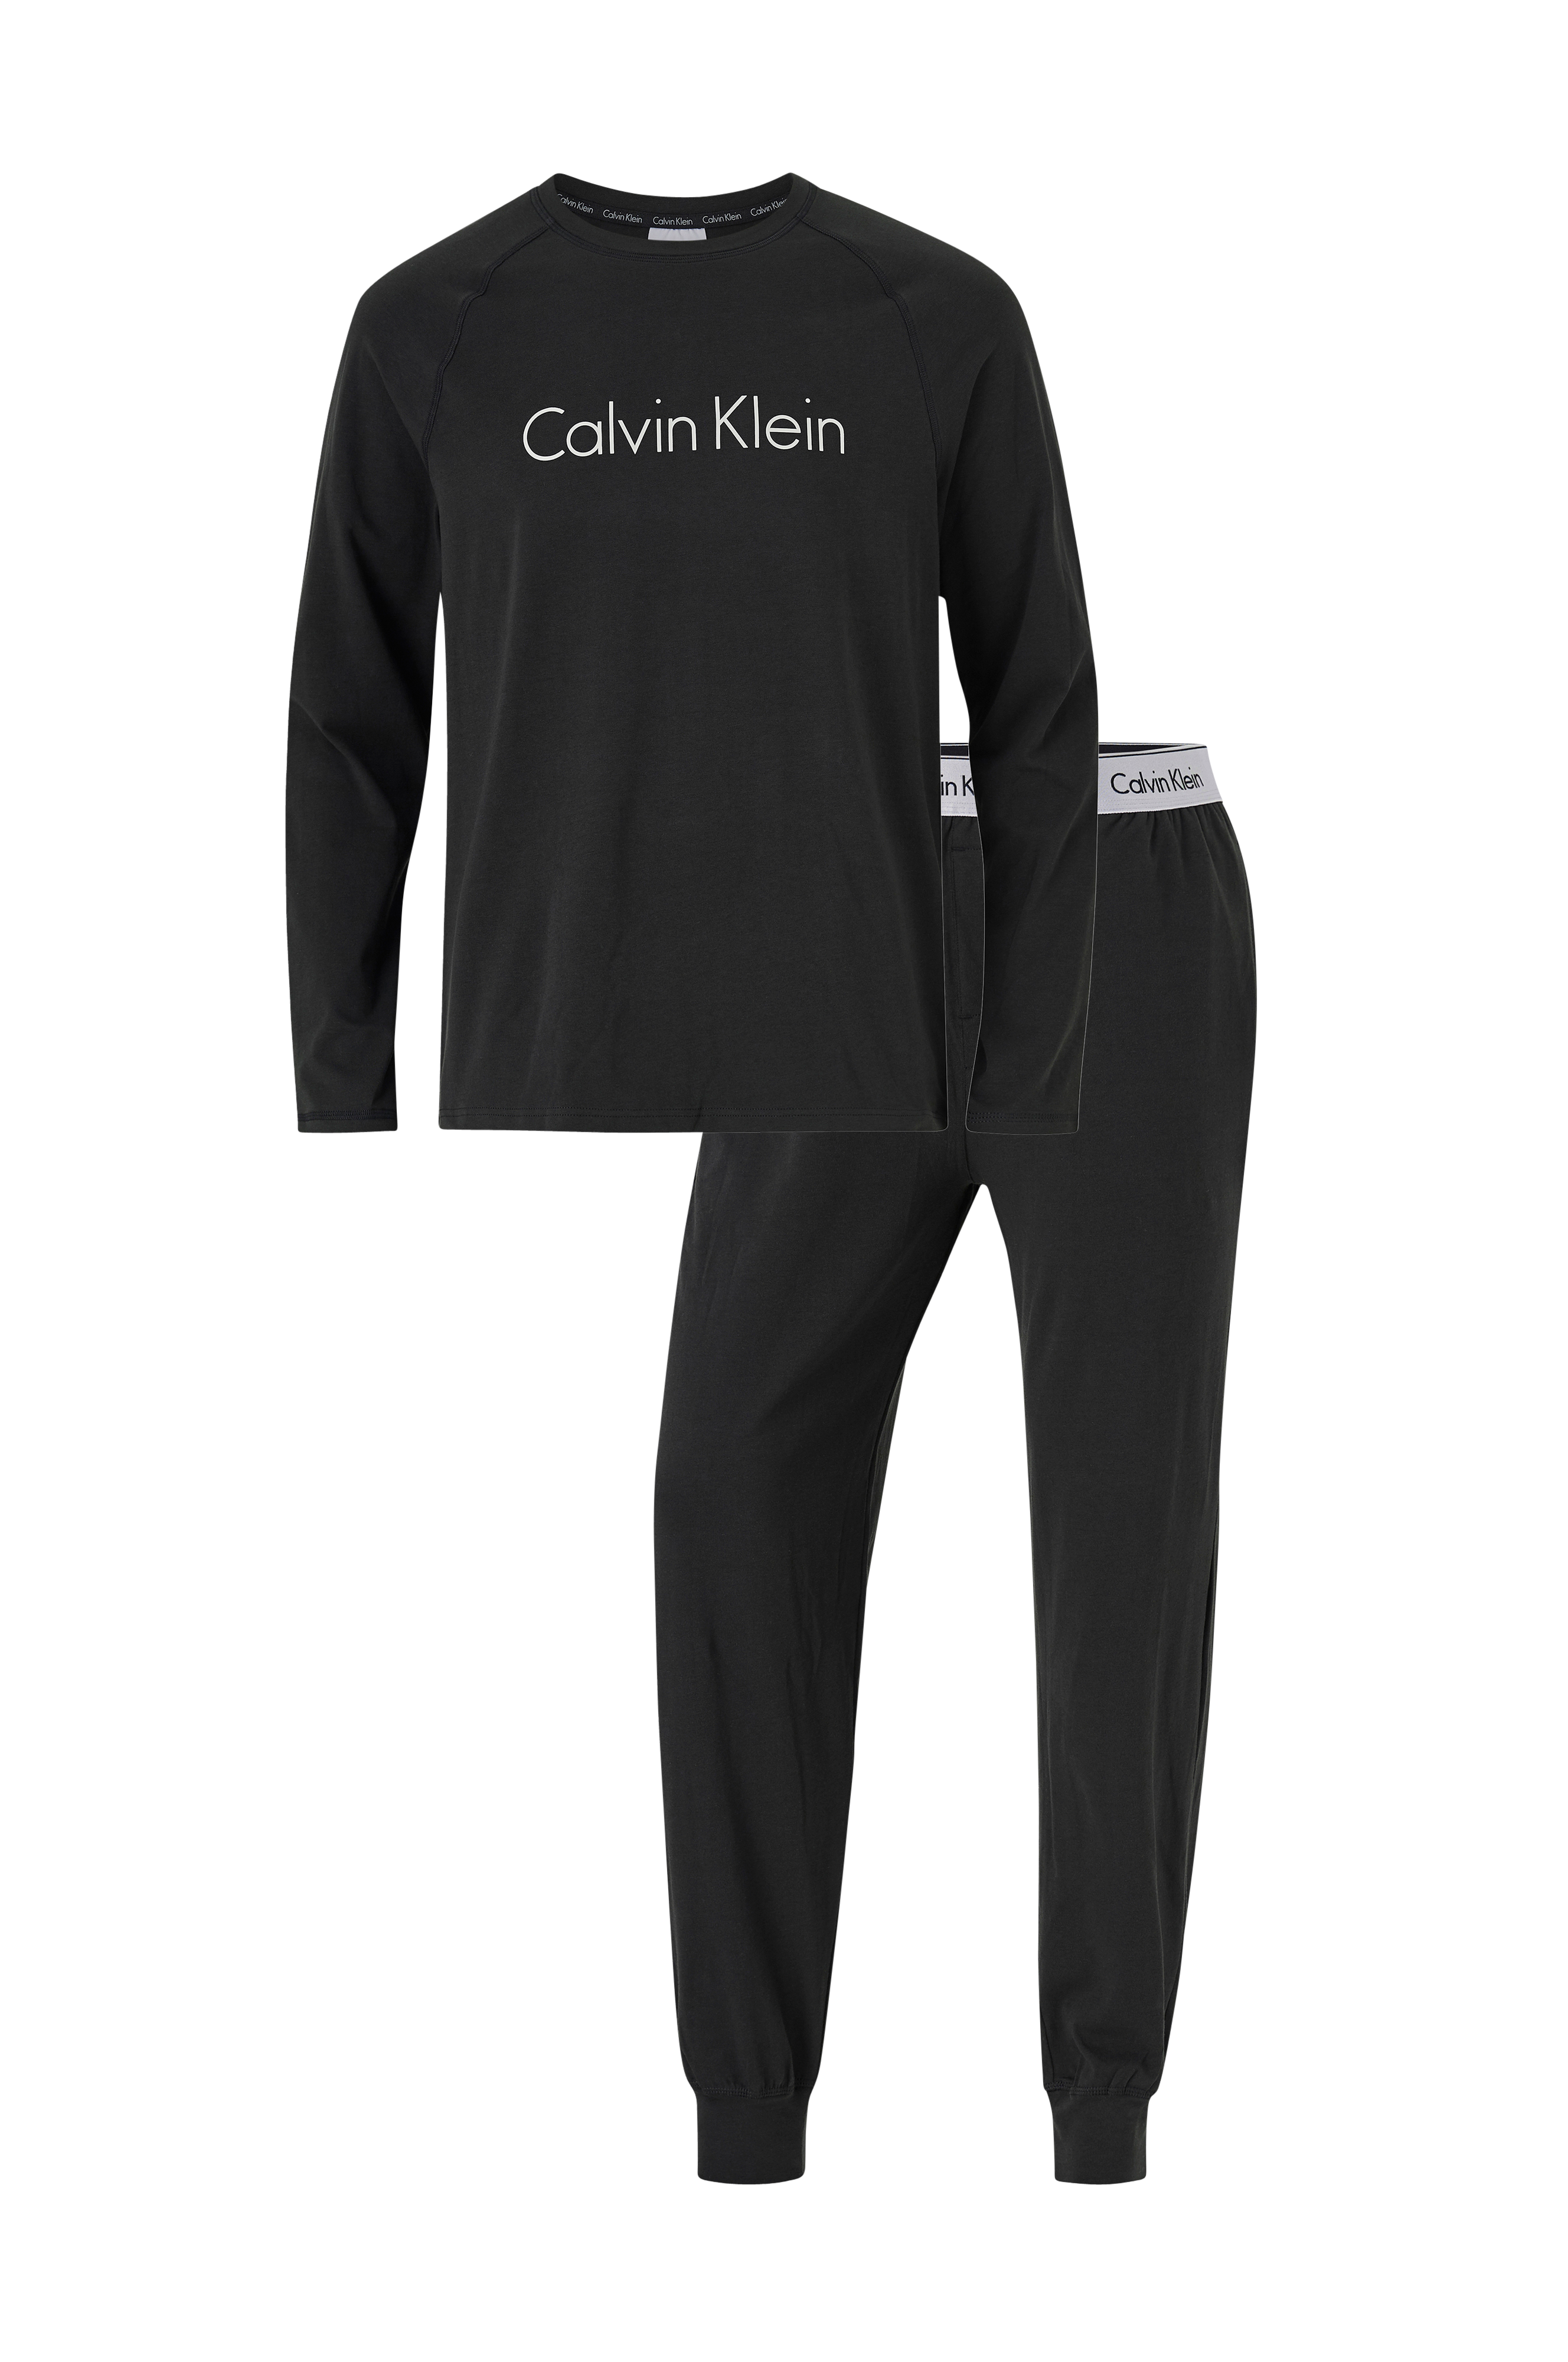 sammen momentum føderation Calvin Klein Underwear Pyjamas Knit L/S Pant Set - Sort - Pyjamas | Ellos.dk